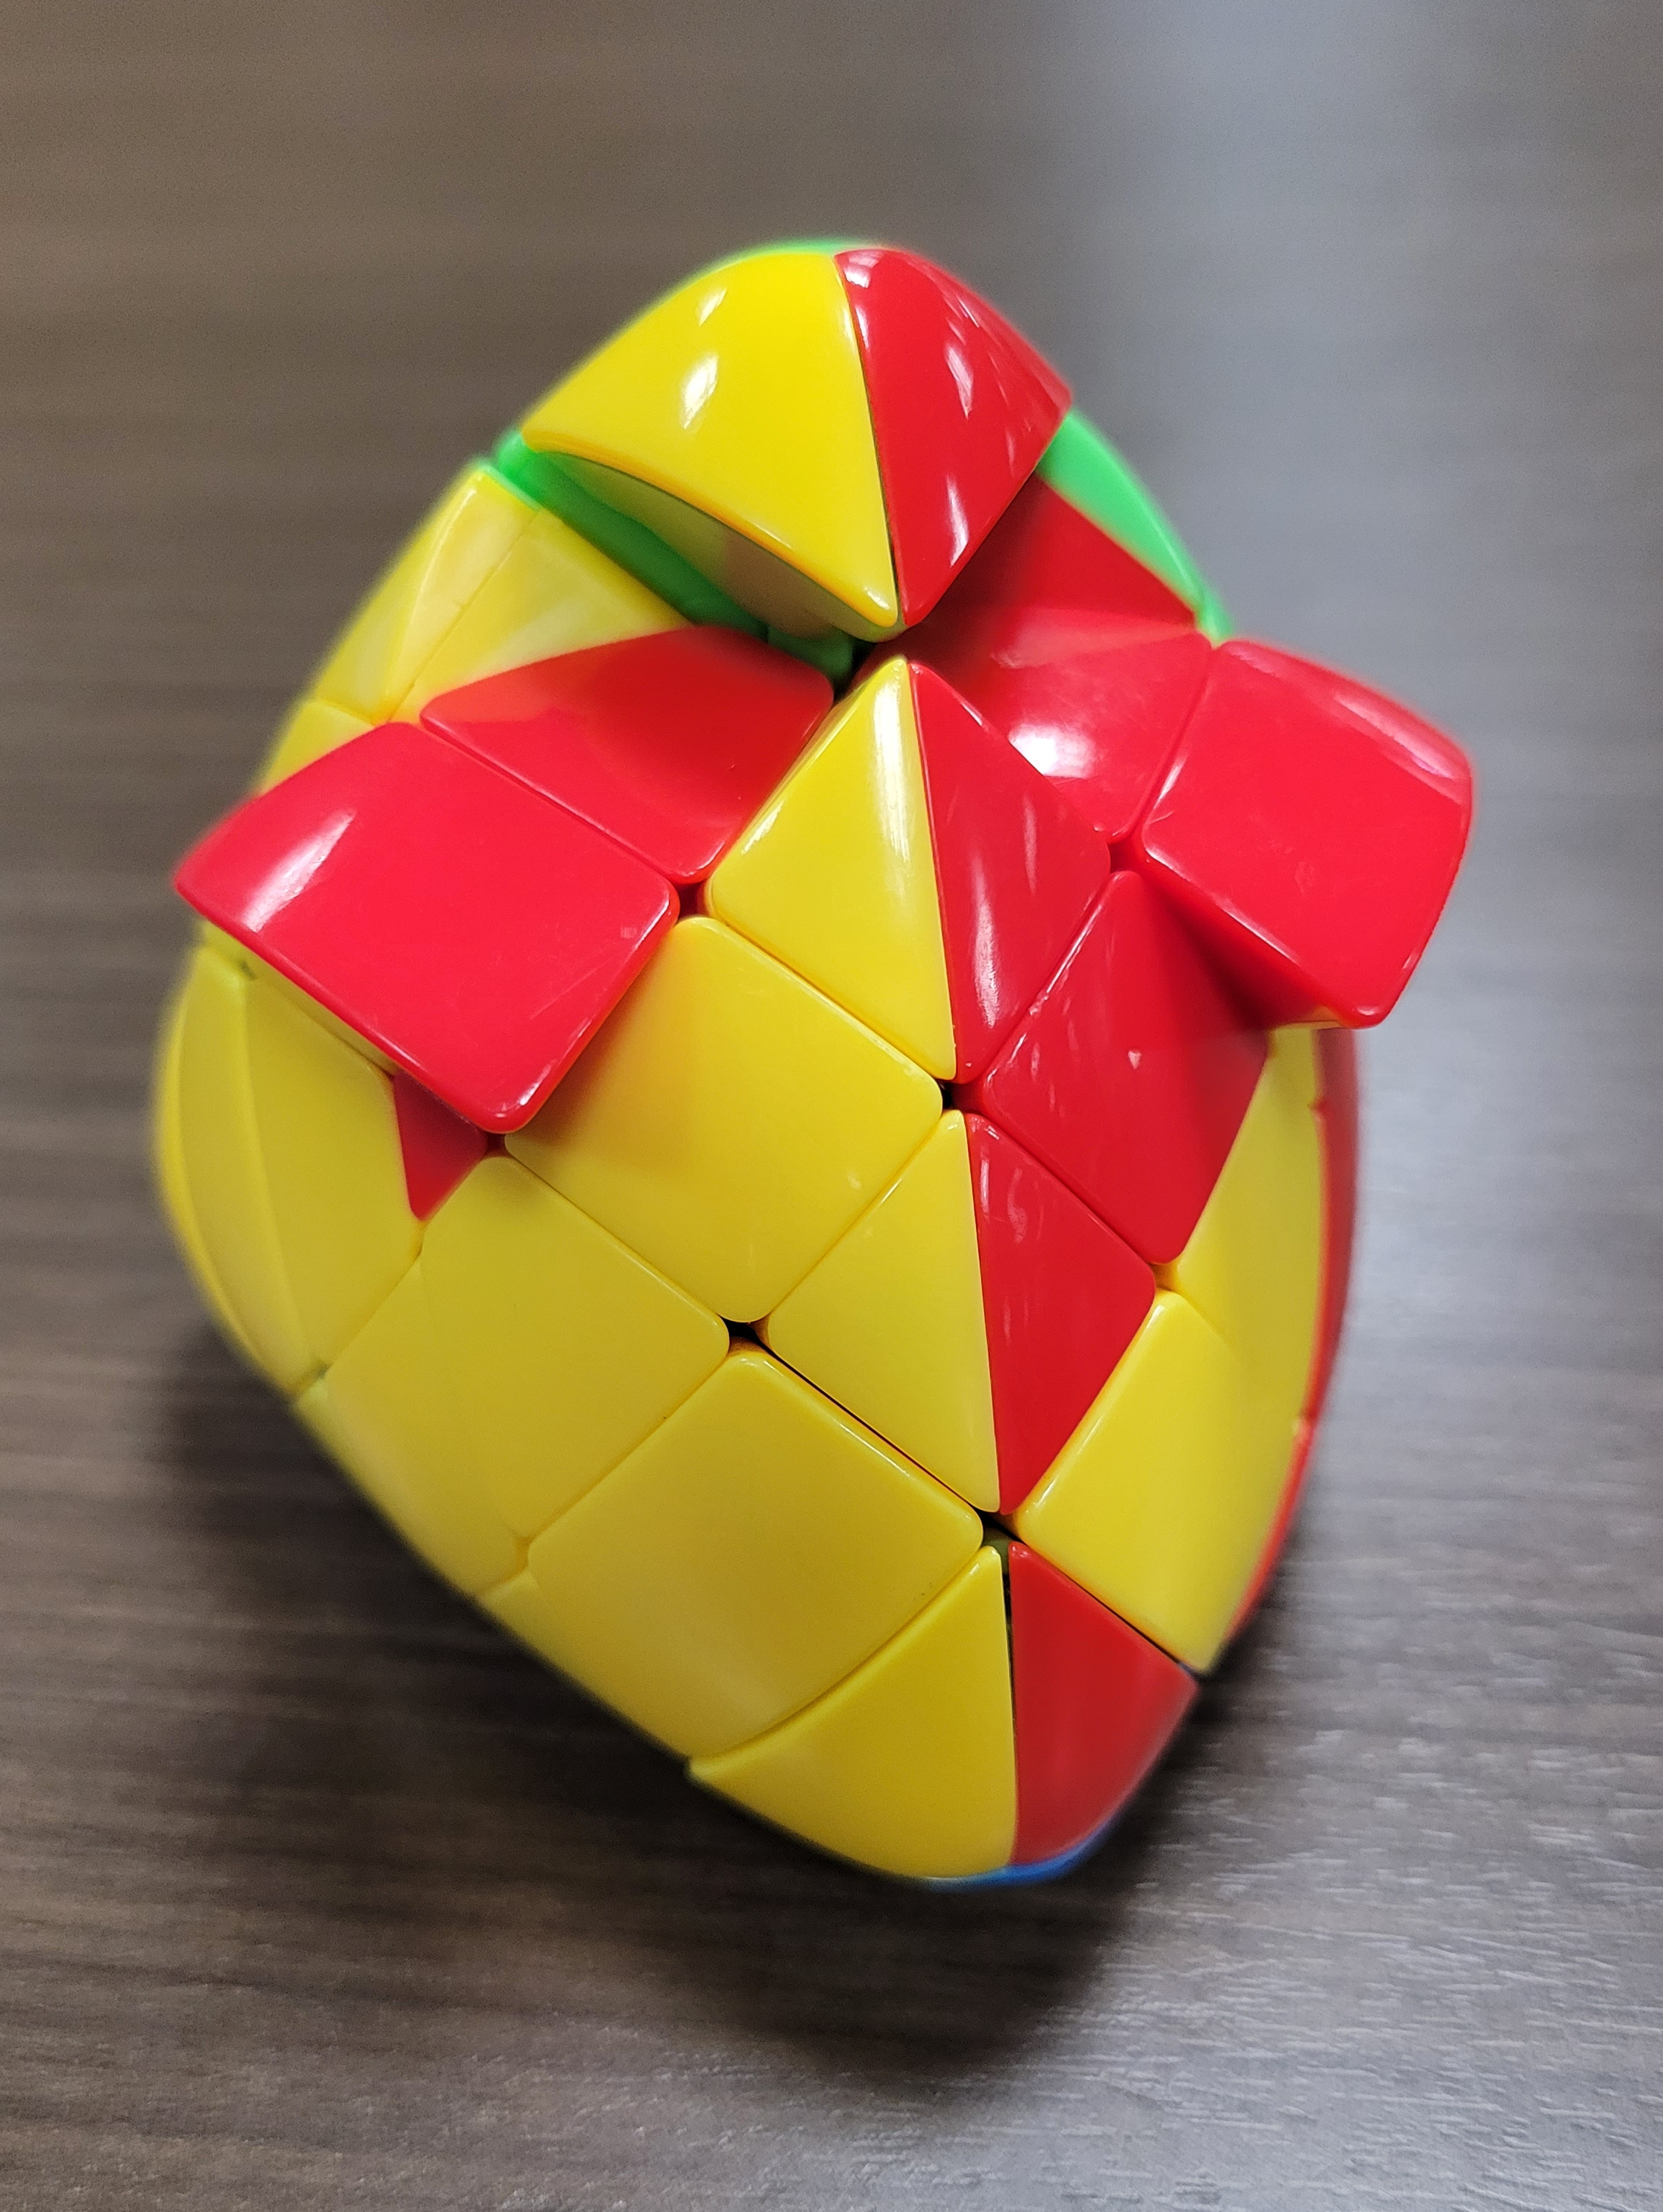 Twisty Puzzles: 4x4 Pyramorphix (Megamorphix) Center Parity